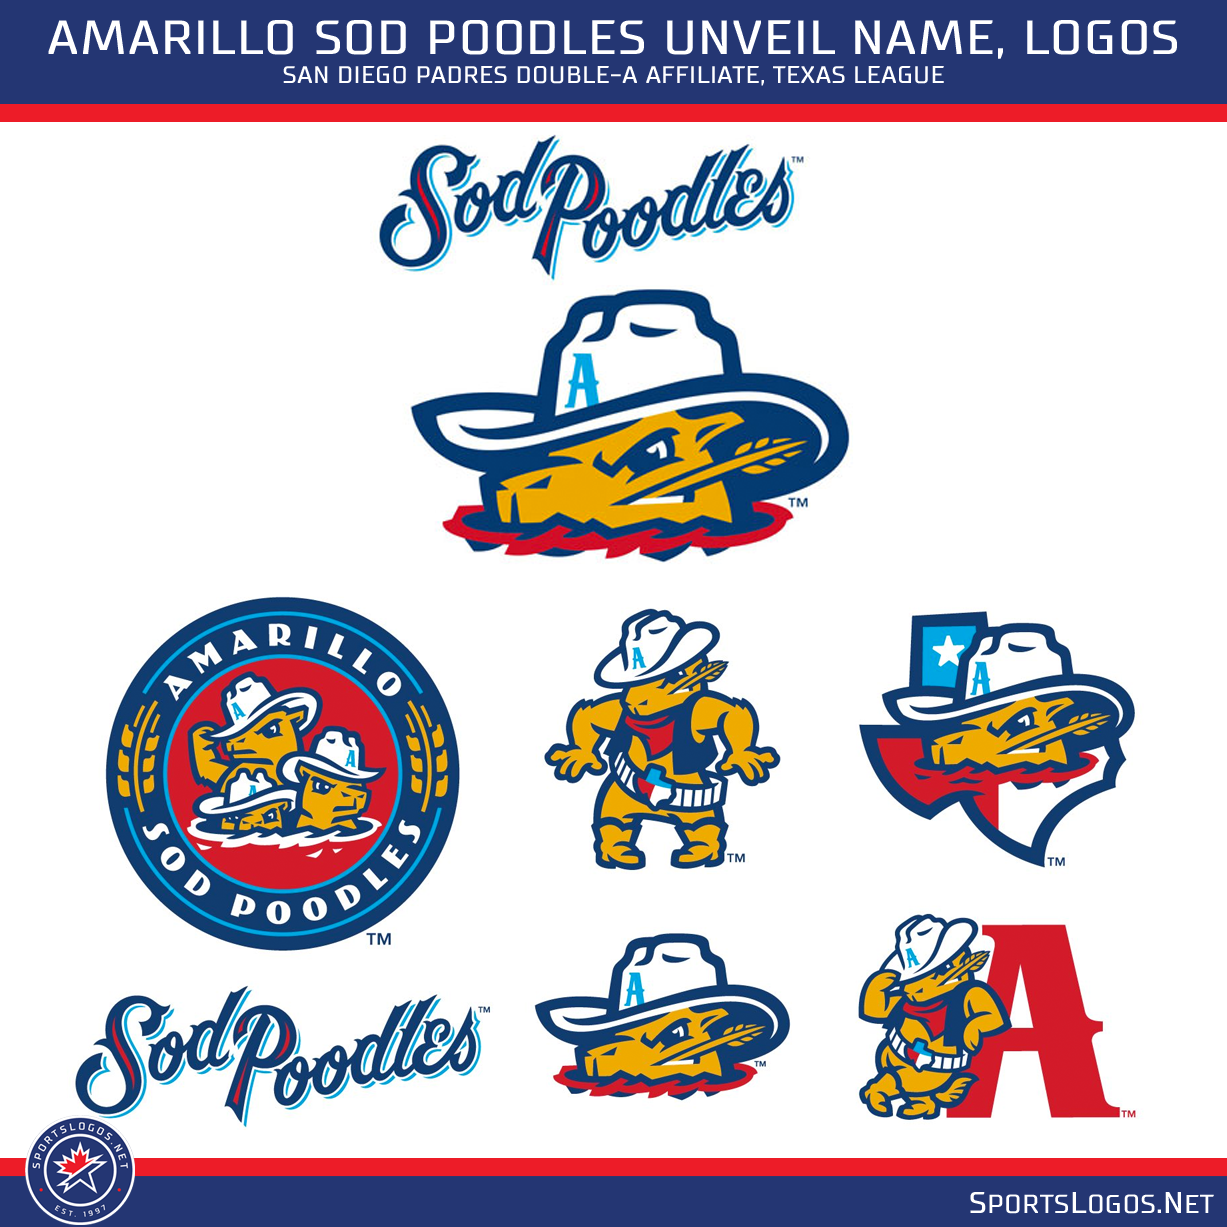 Amarillo Sod Poodles Announced as new Minor League Ball Team